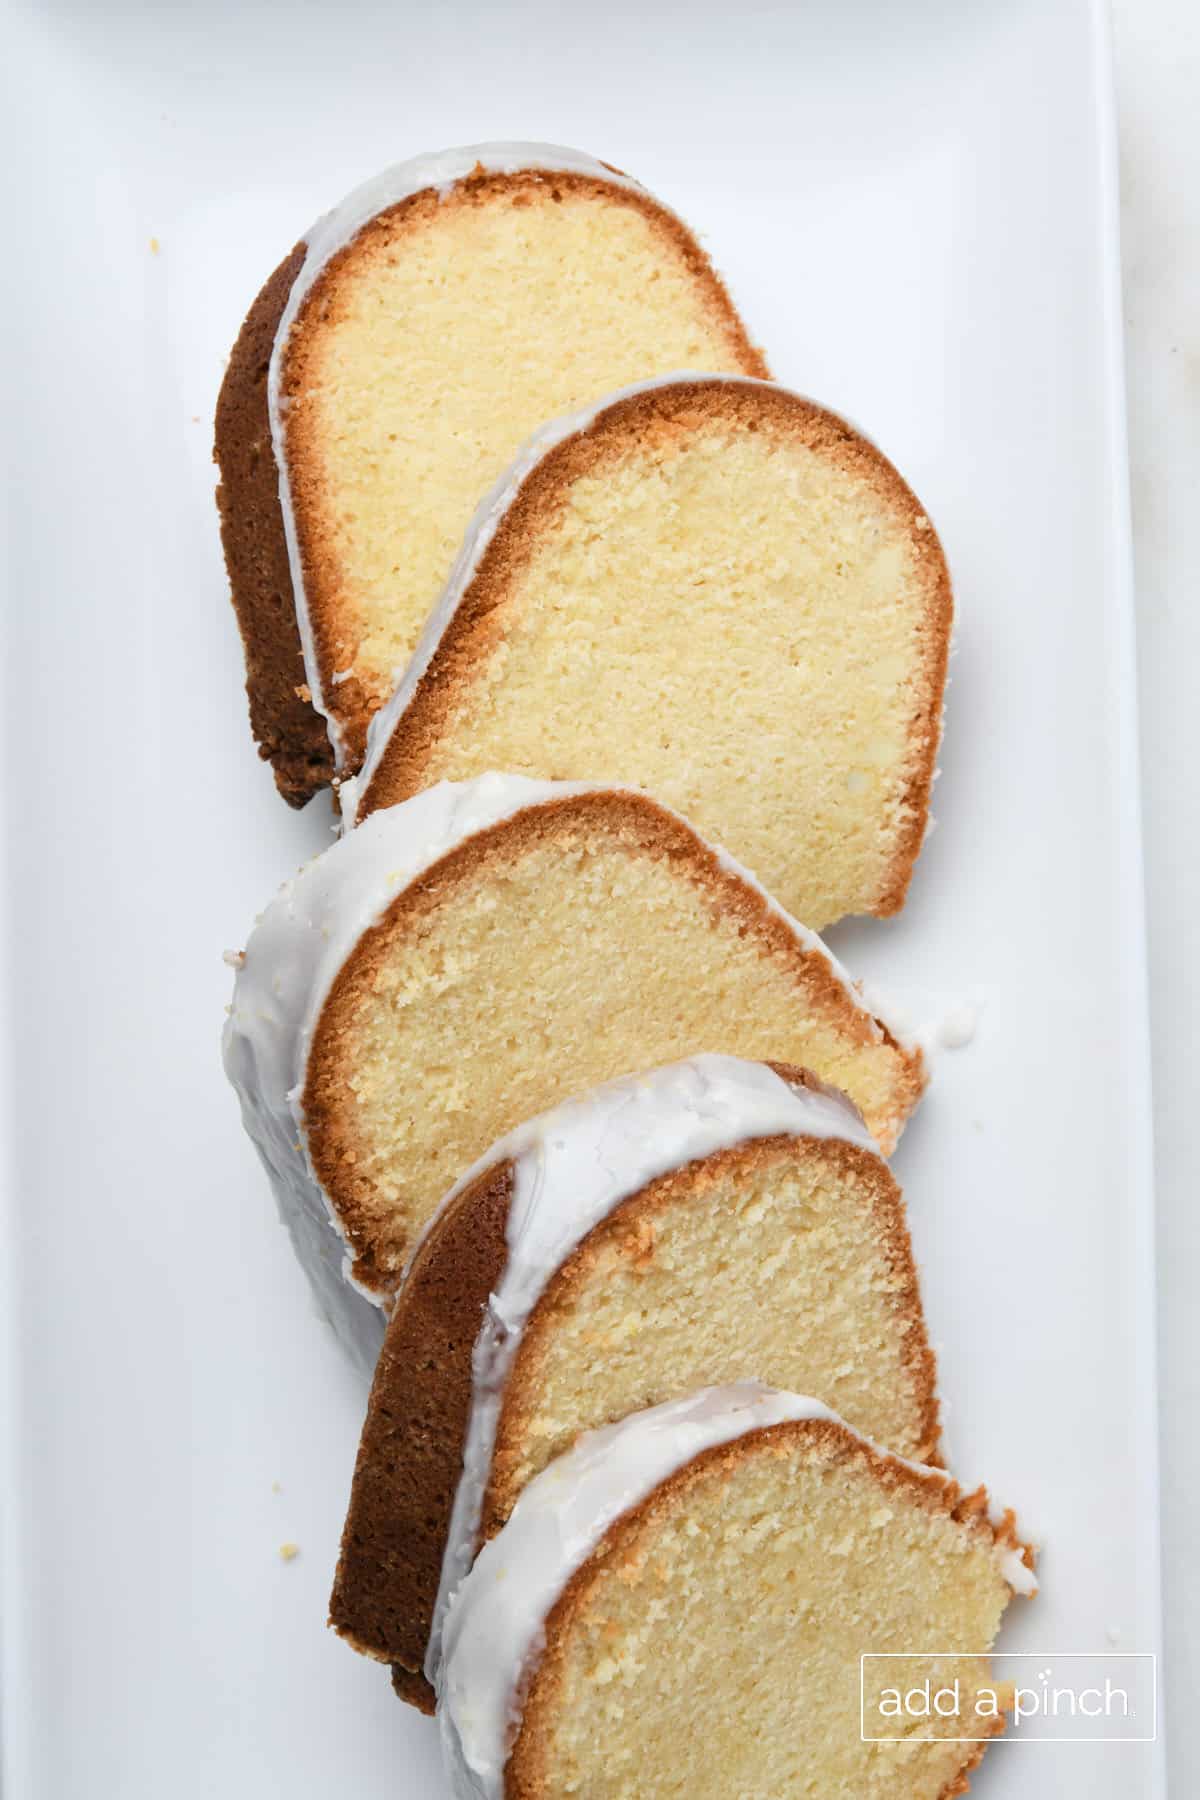 Five slices of glazed lemon pound cake sit on a white tray.